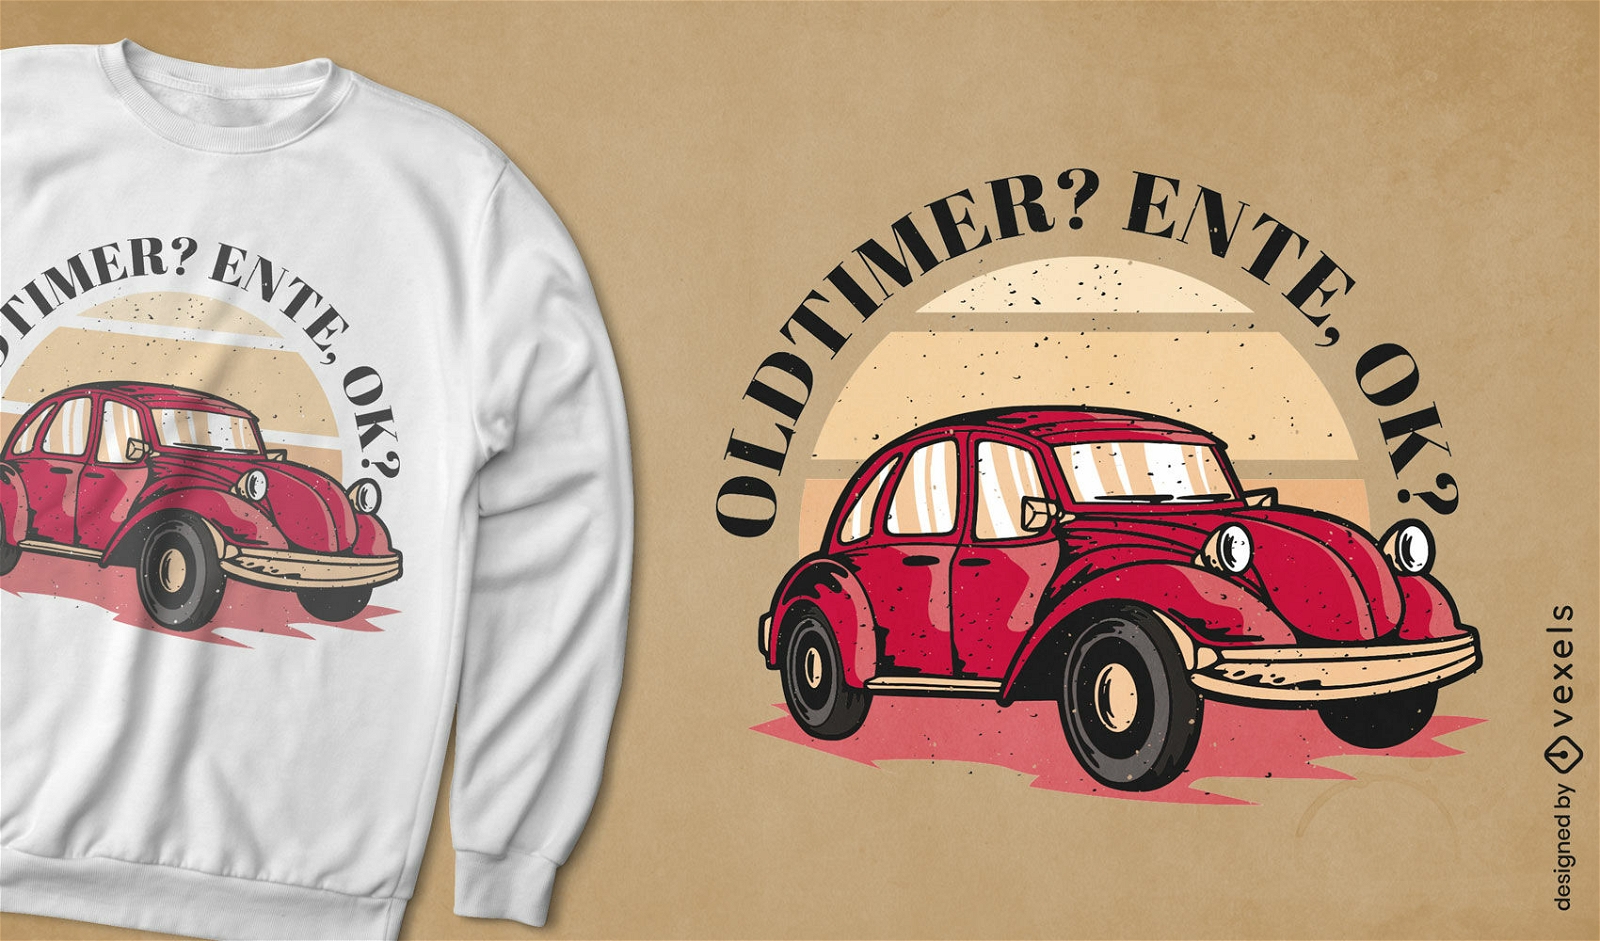 Retro old car transportation t-shirt design